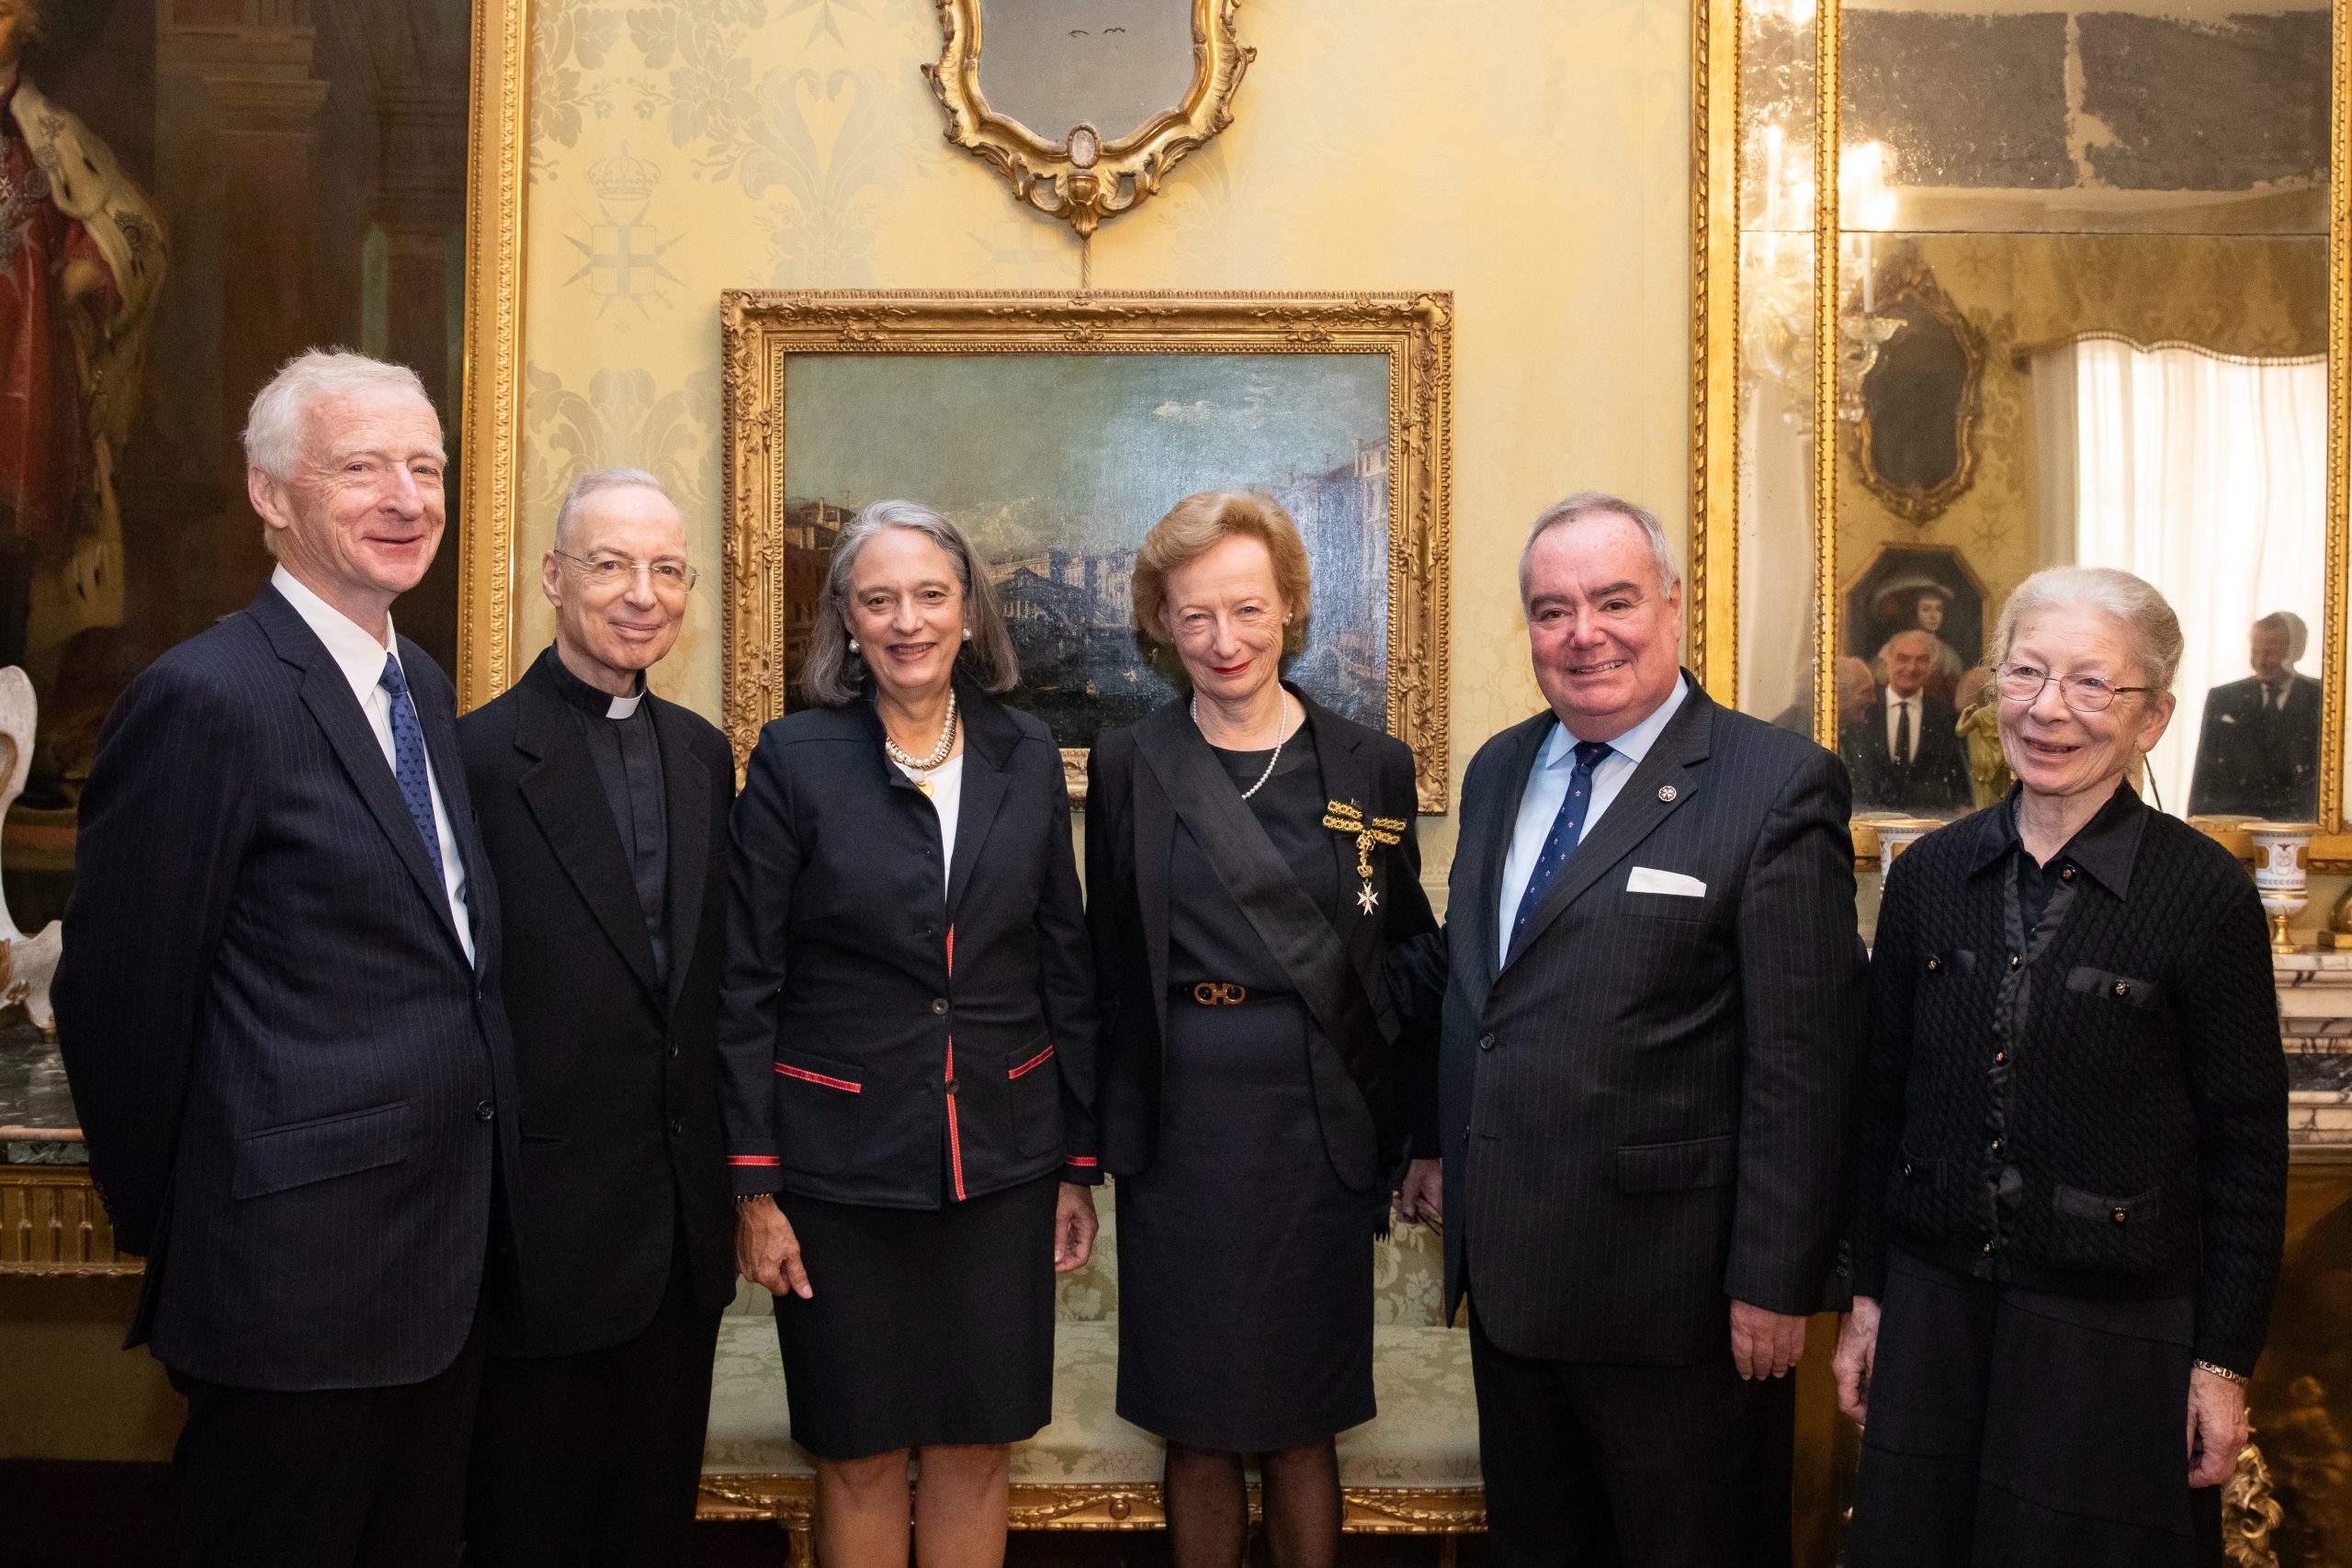 Presentation of the award of the Grand Cross to H.E. Ambassador Marie-Thérèse Pictet-Althann